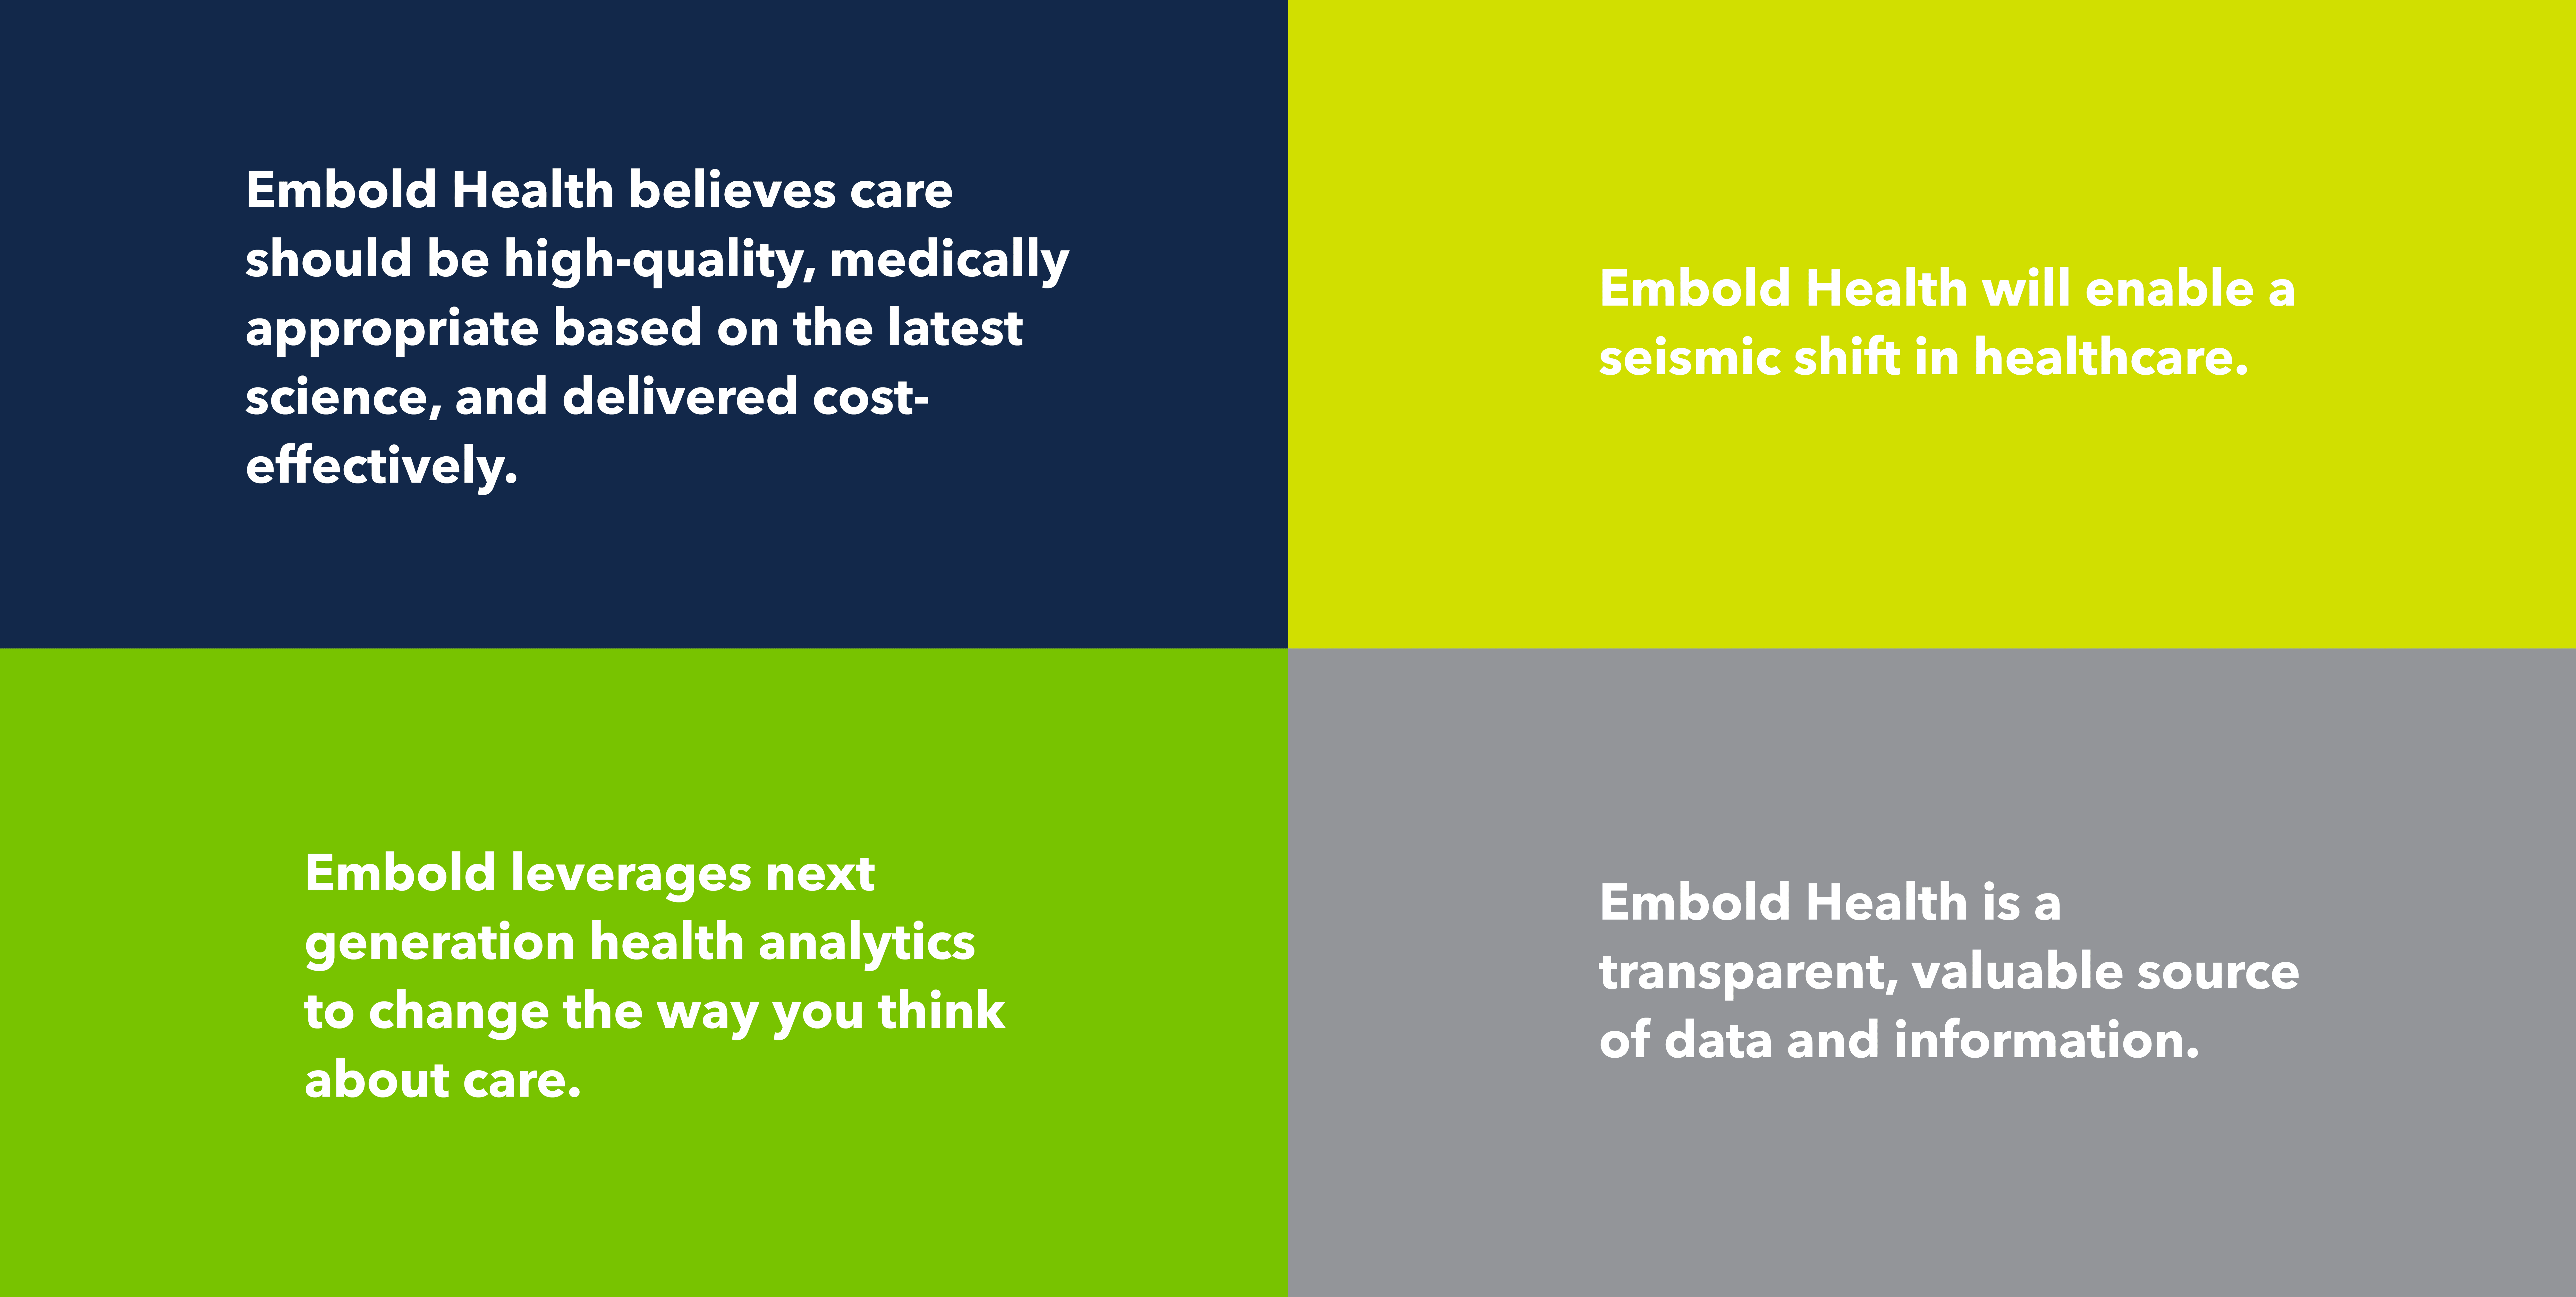 Embold Health